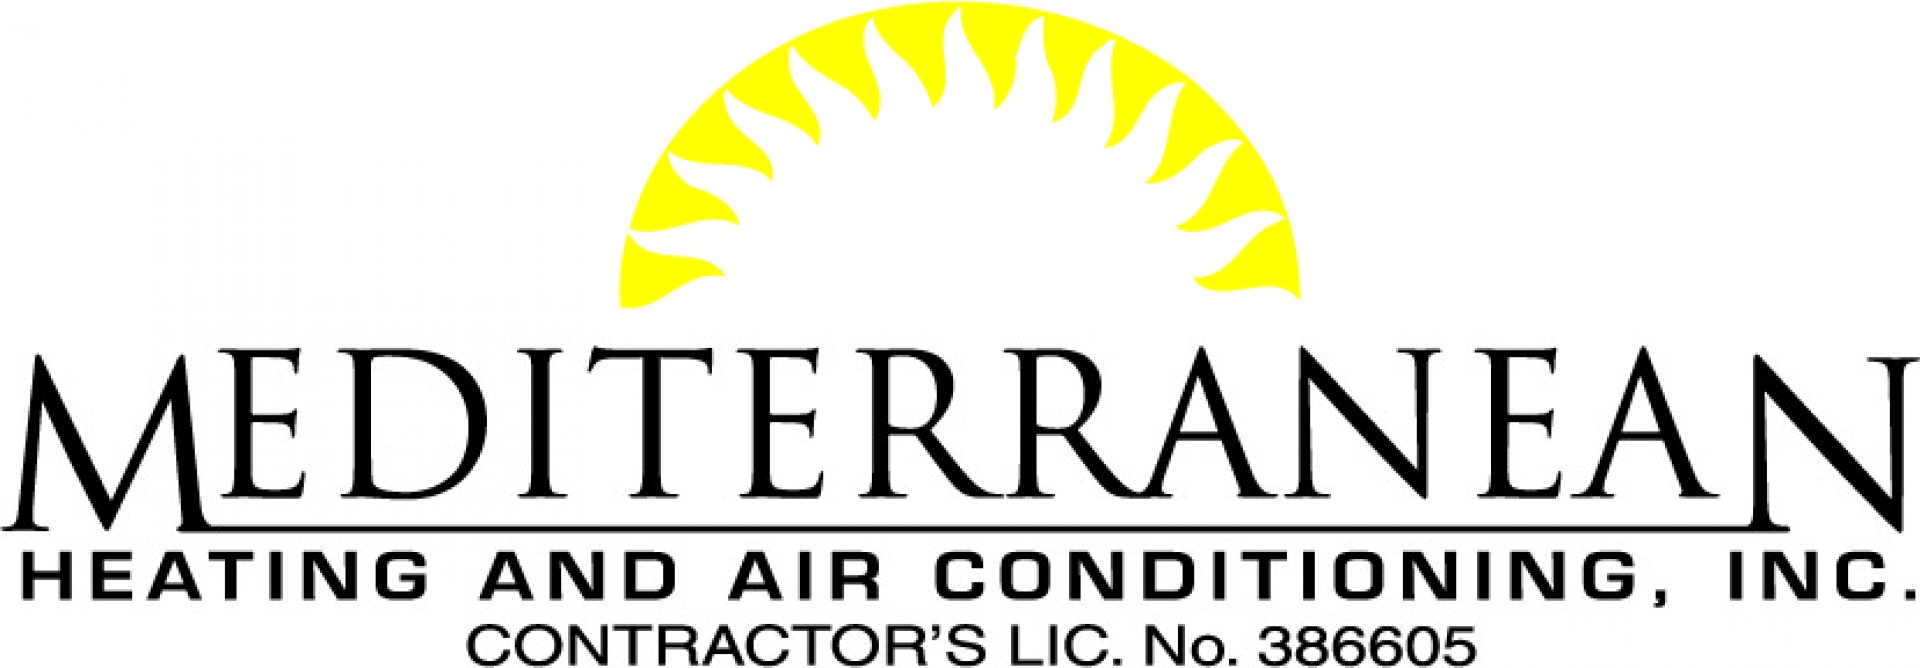 Mediterranean Heating & Air Conditioning Logo